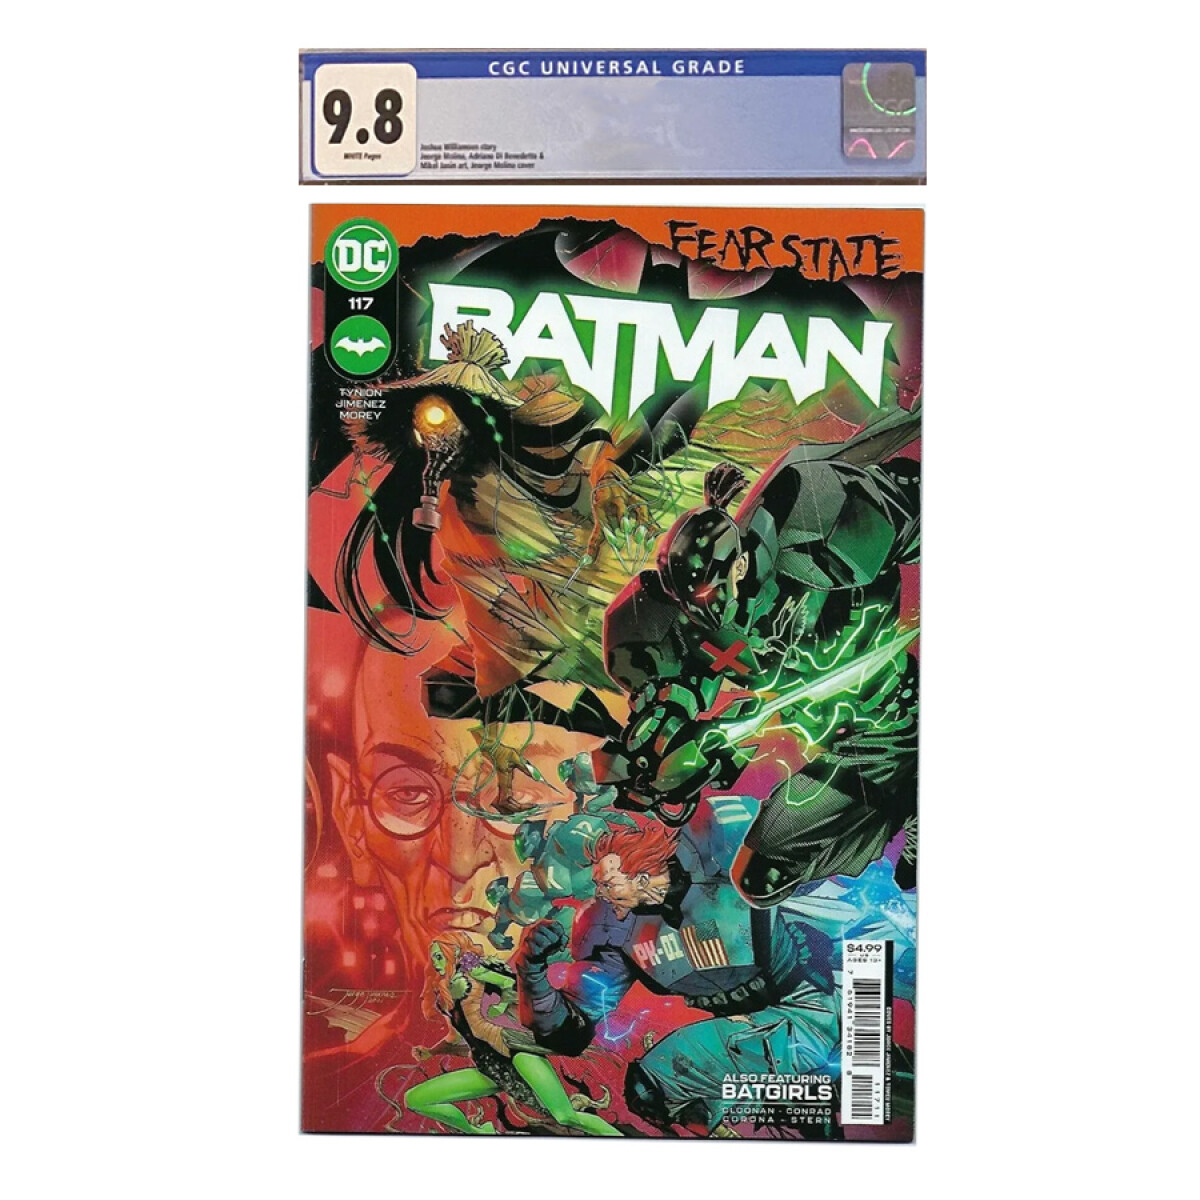 CGC Universal Grade Comic - Batman Fear State · Batman #117 